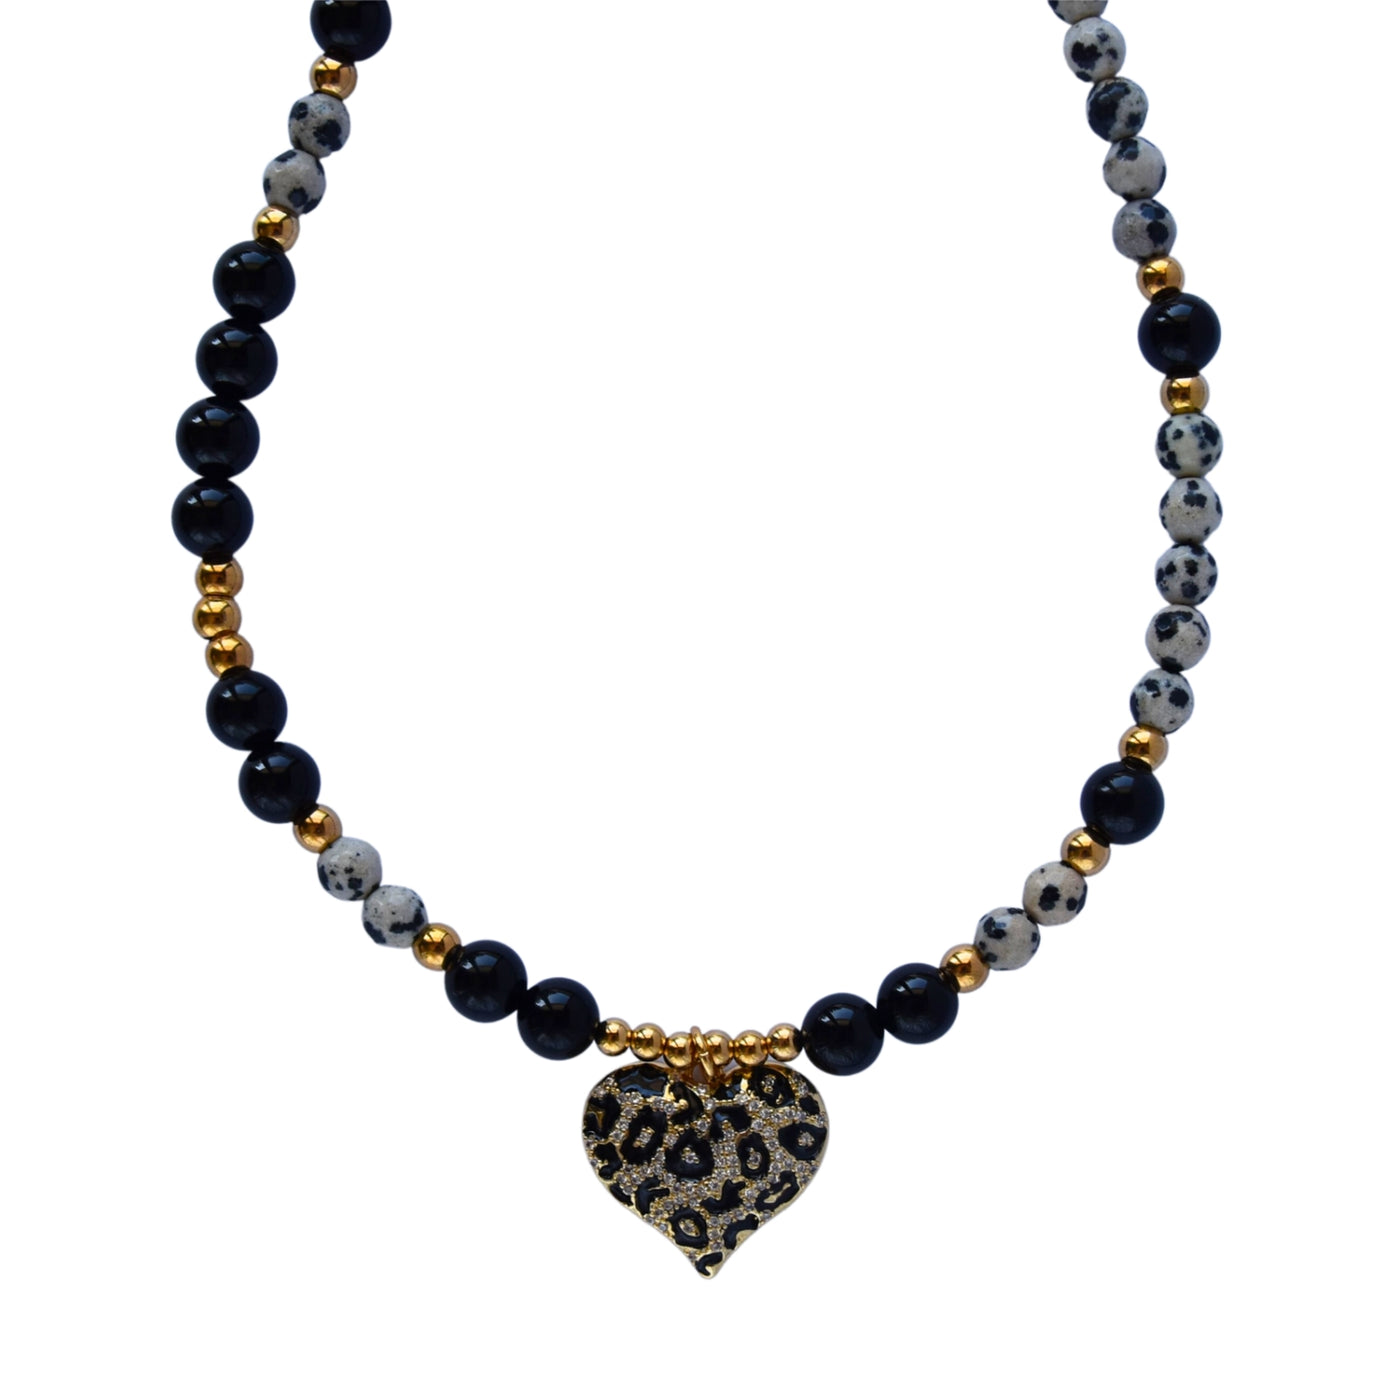 Black agate and dalmation jasper necklace